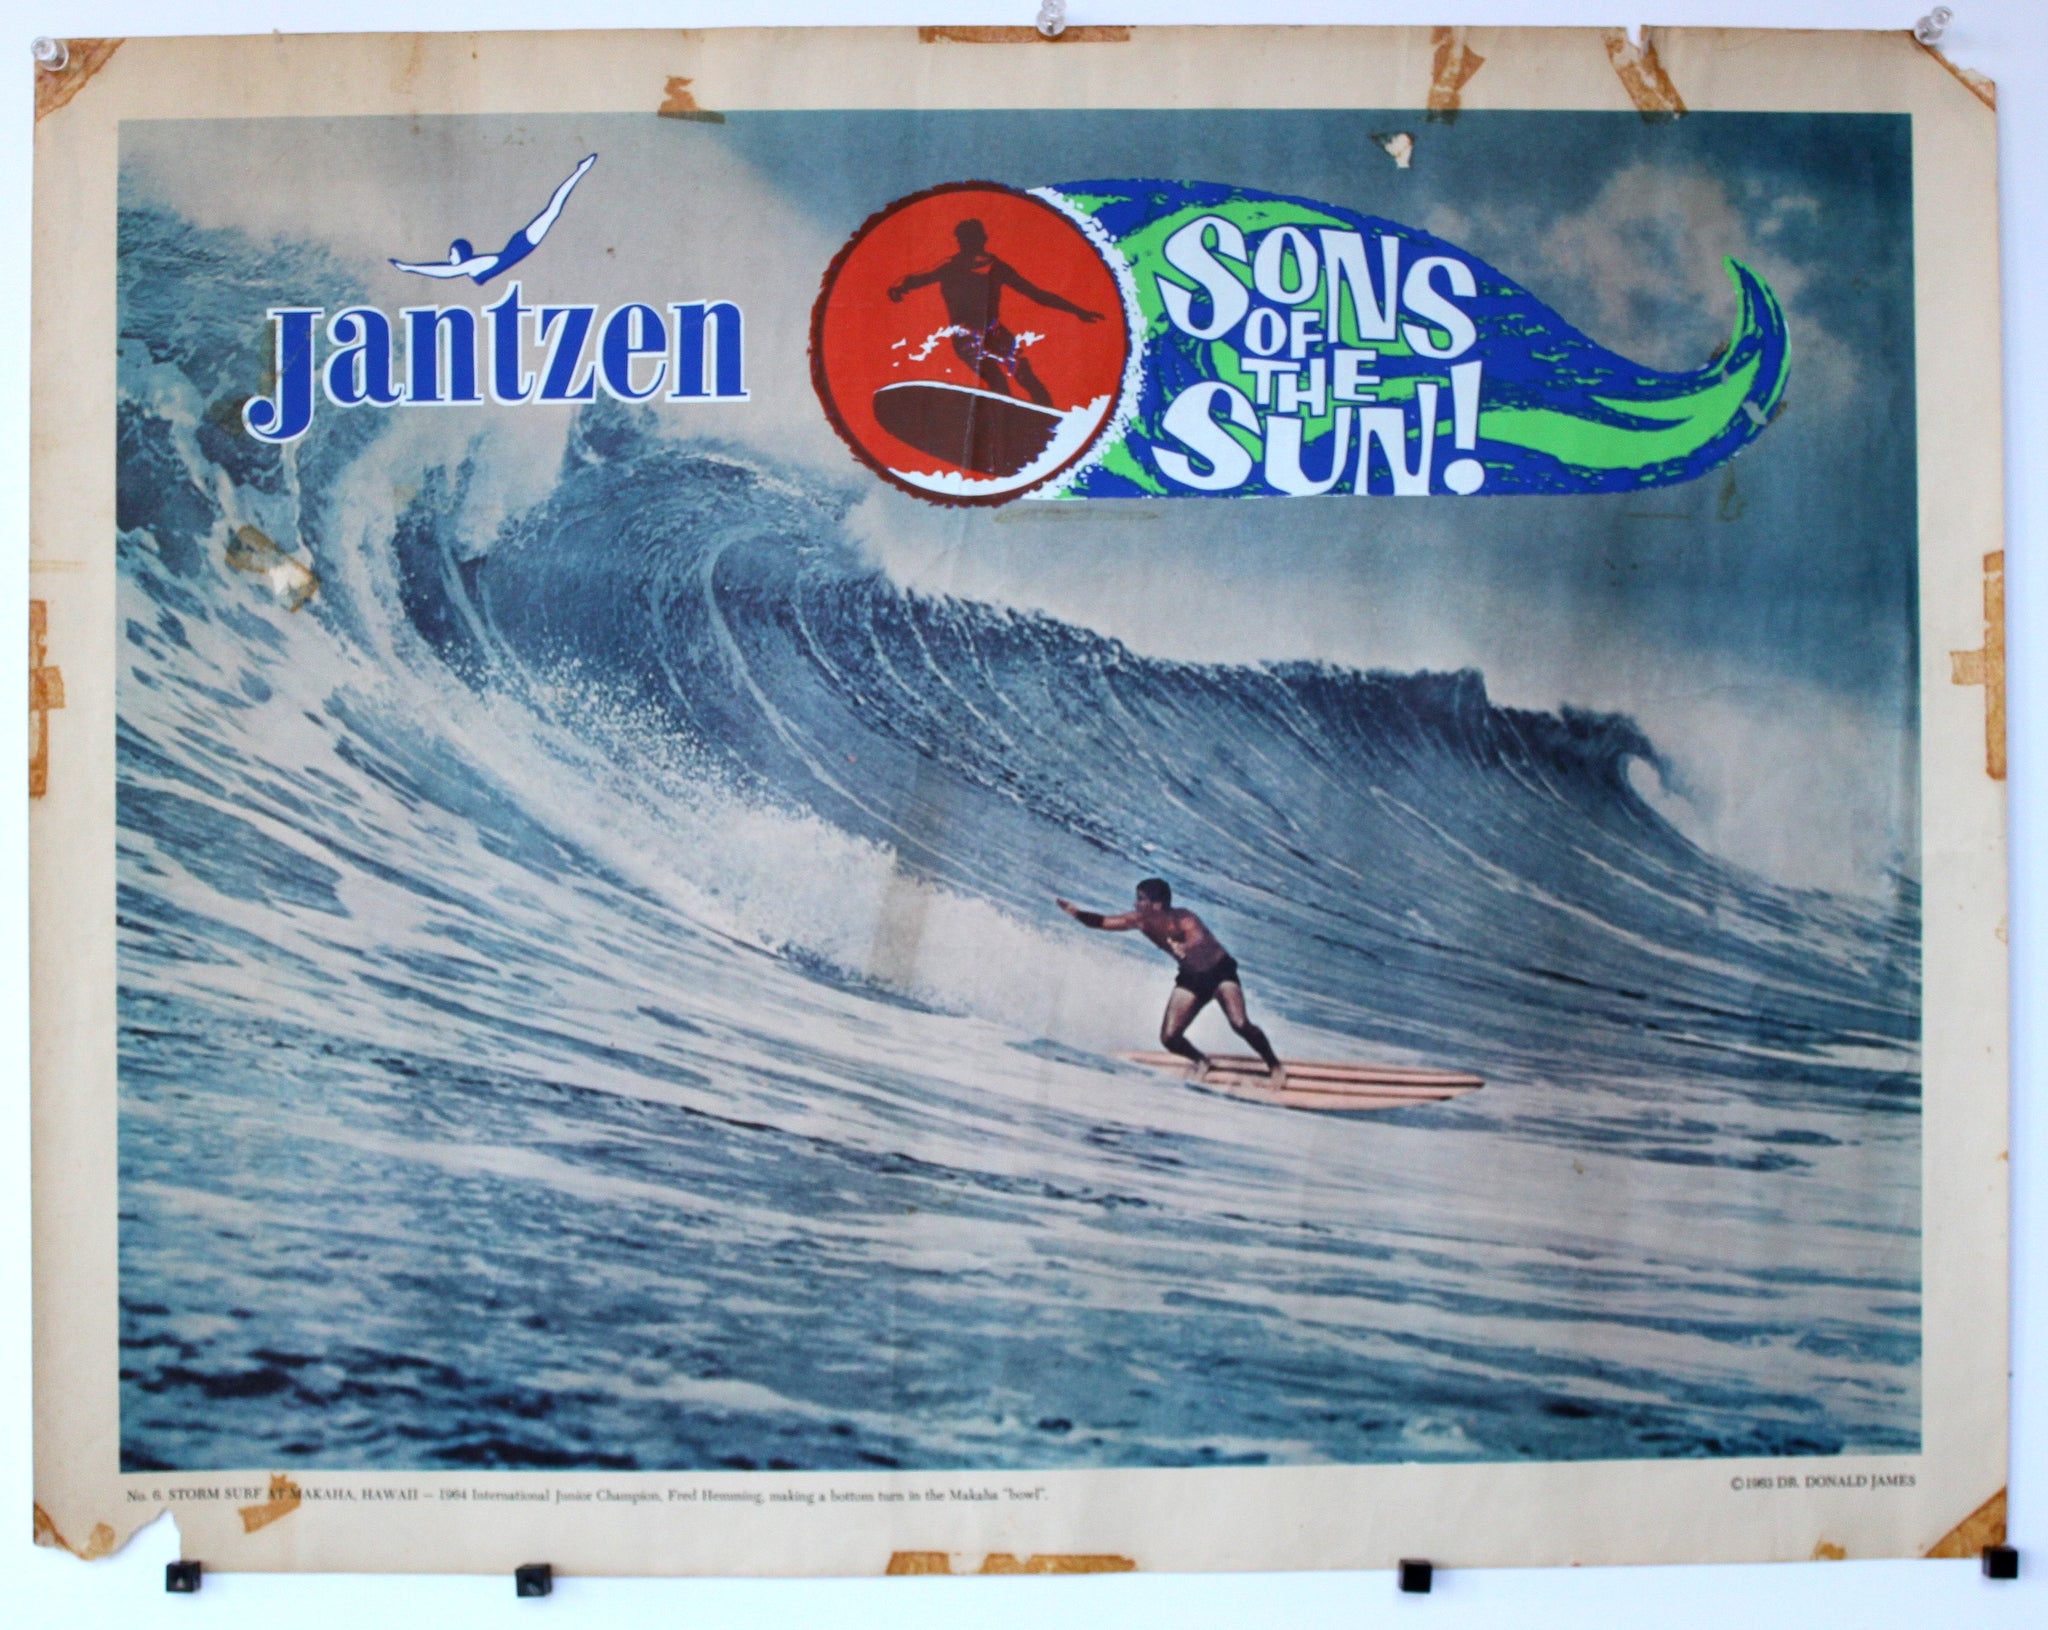 Sons of the Sun. Jantzen Promo poster.